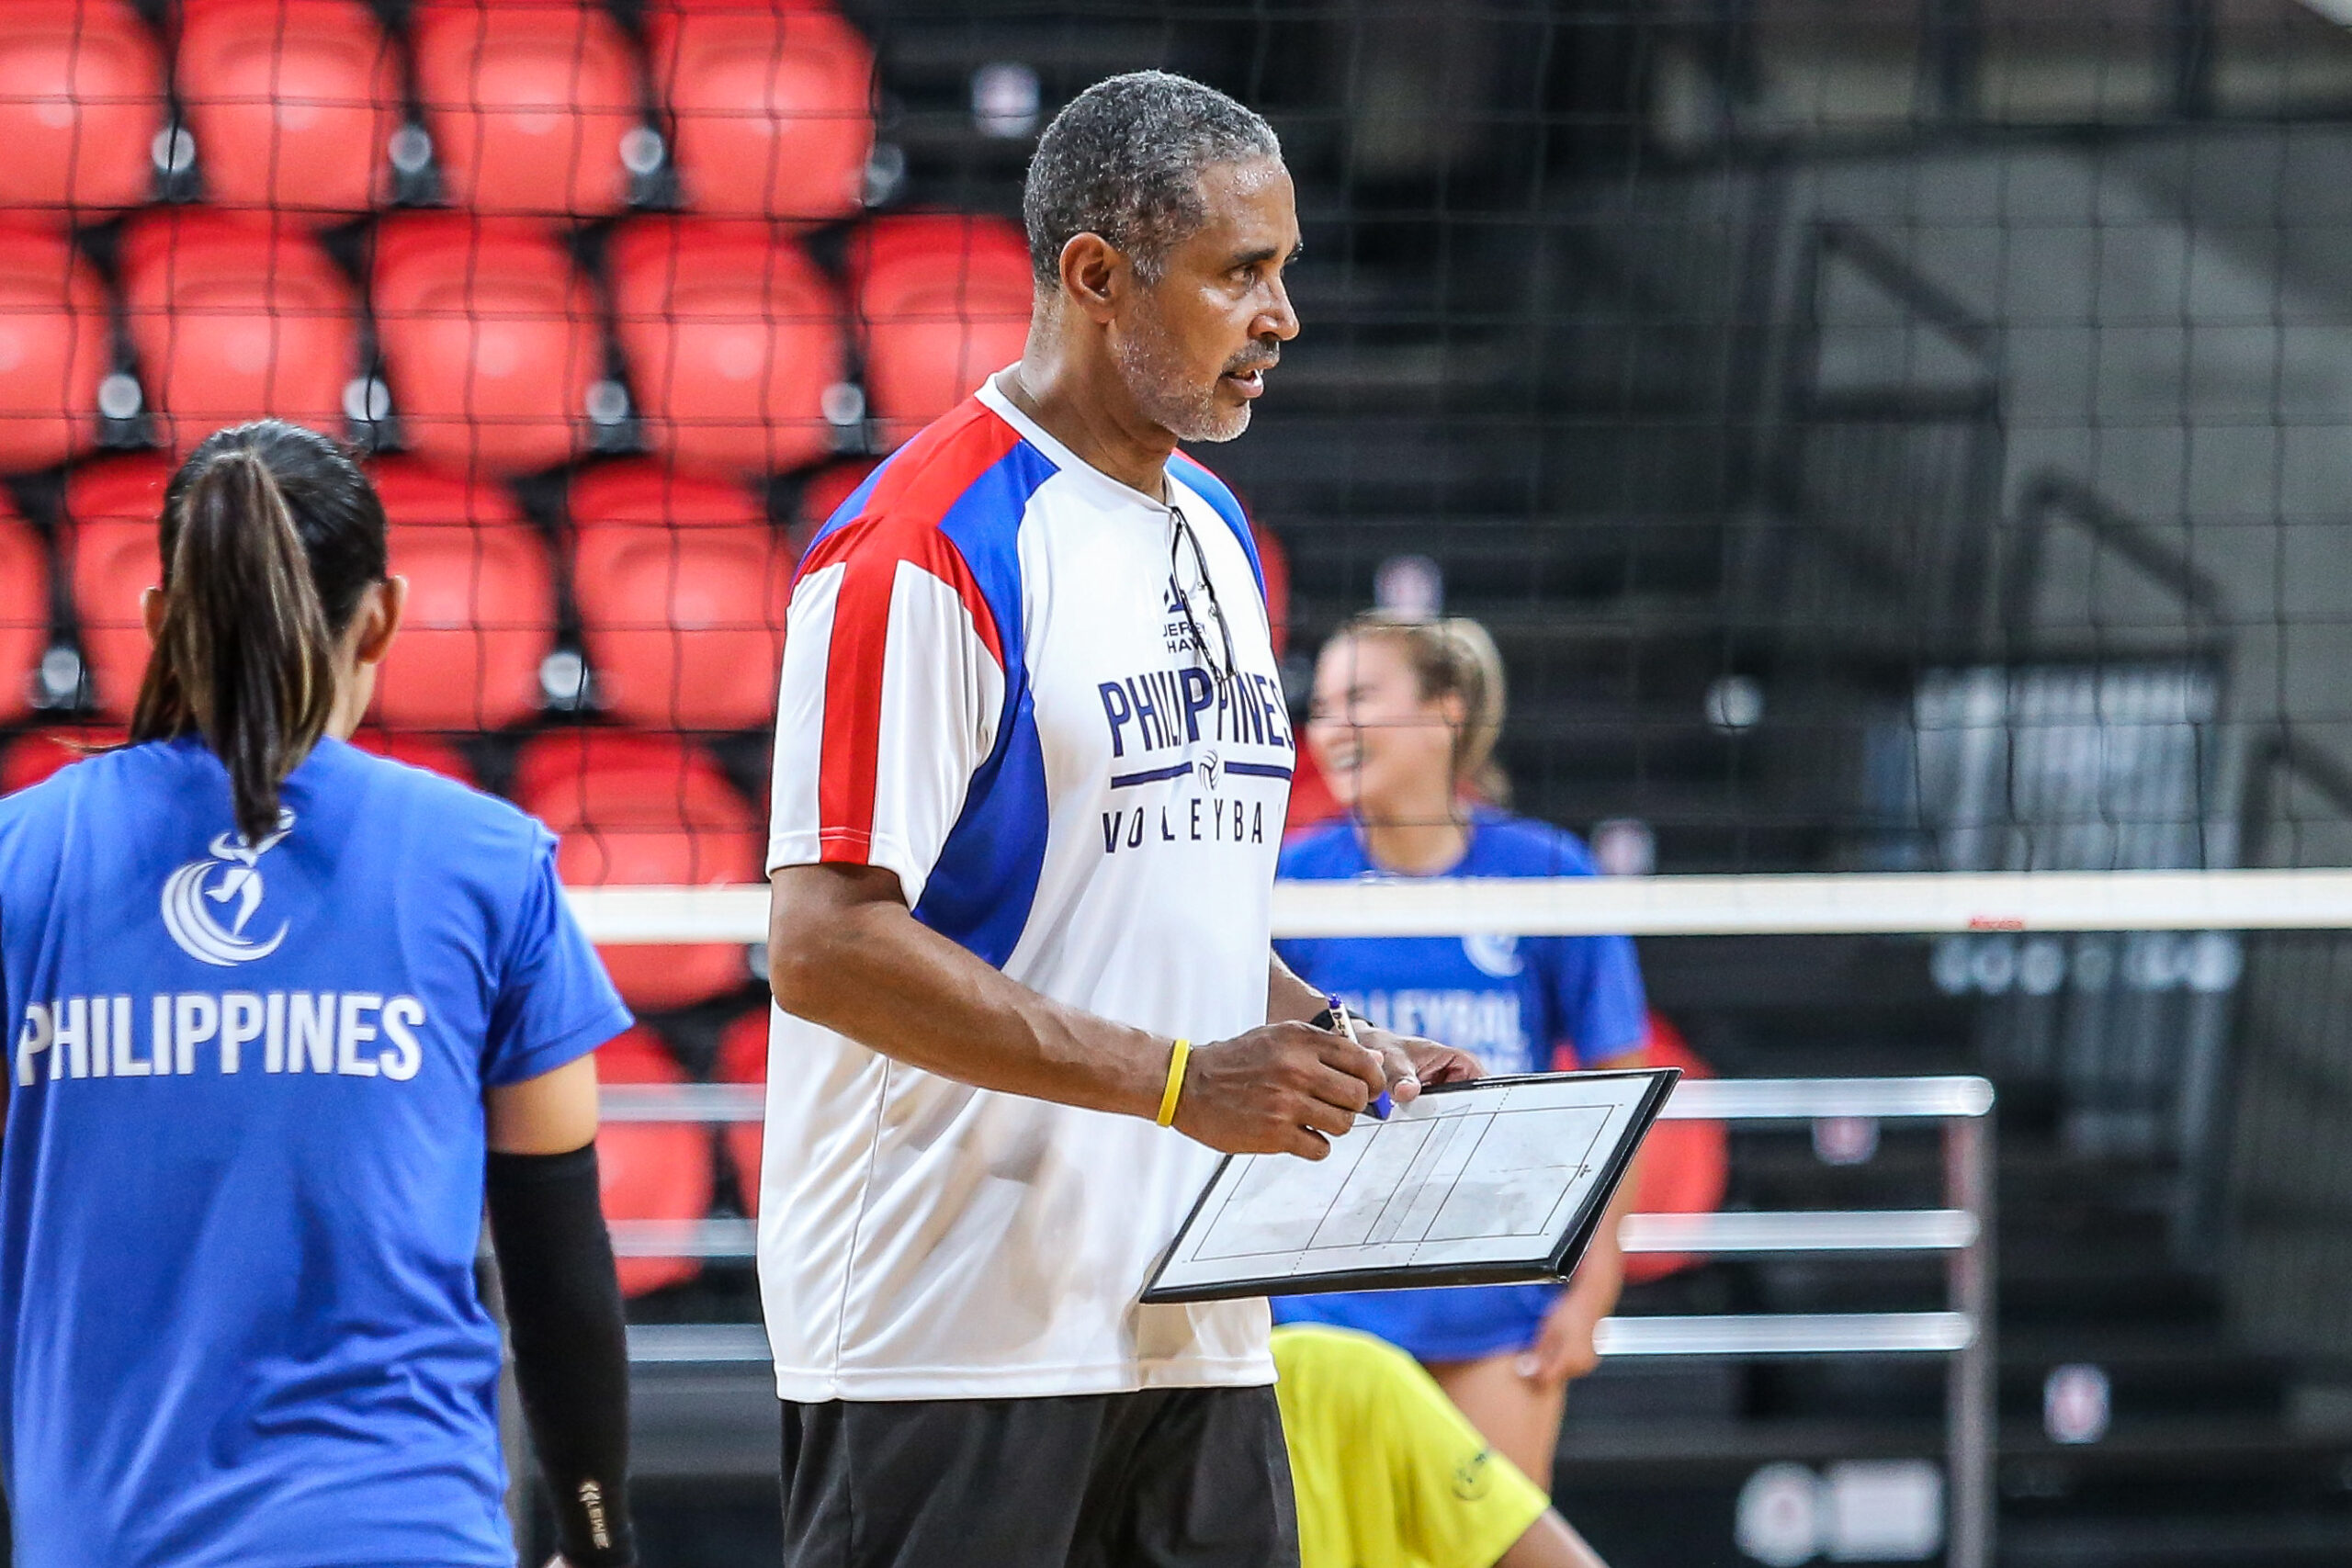 Philippine women's national volleyball team coach Jorge Souza de Brito PH volleyball